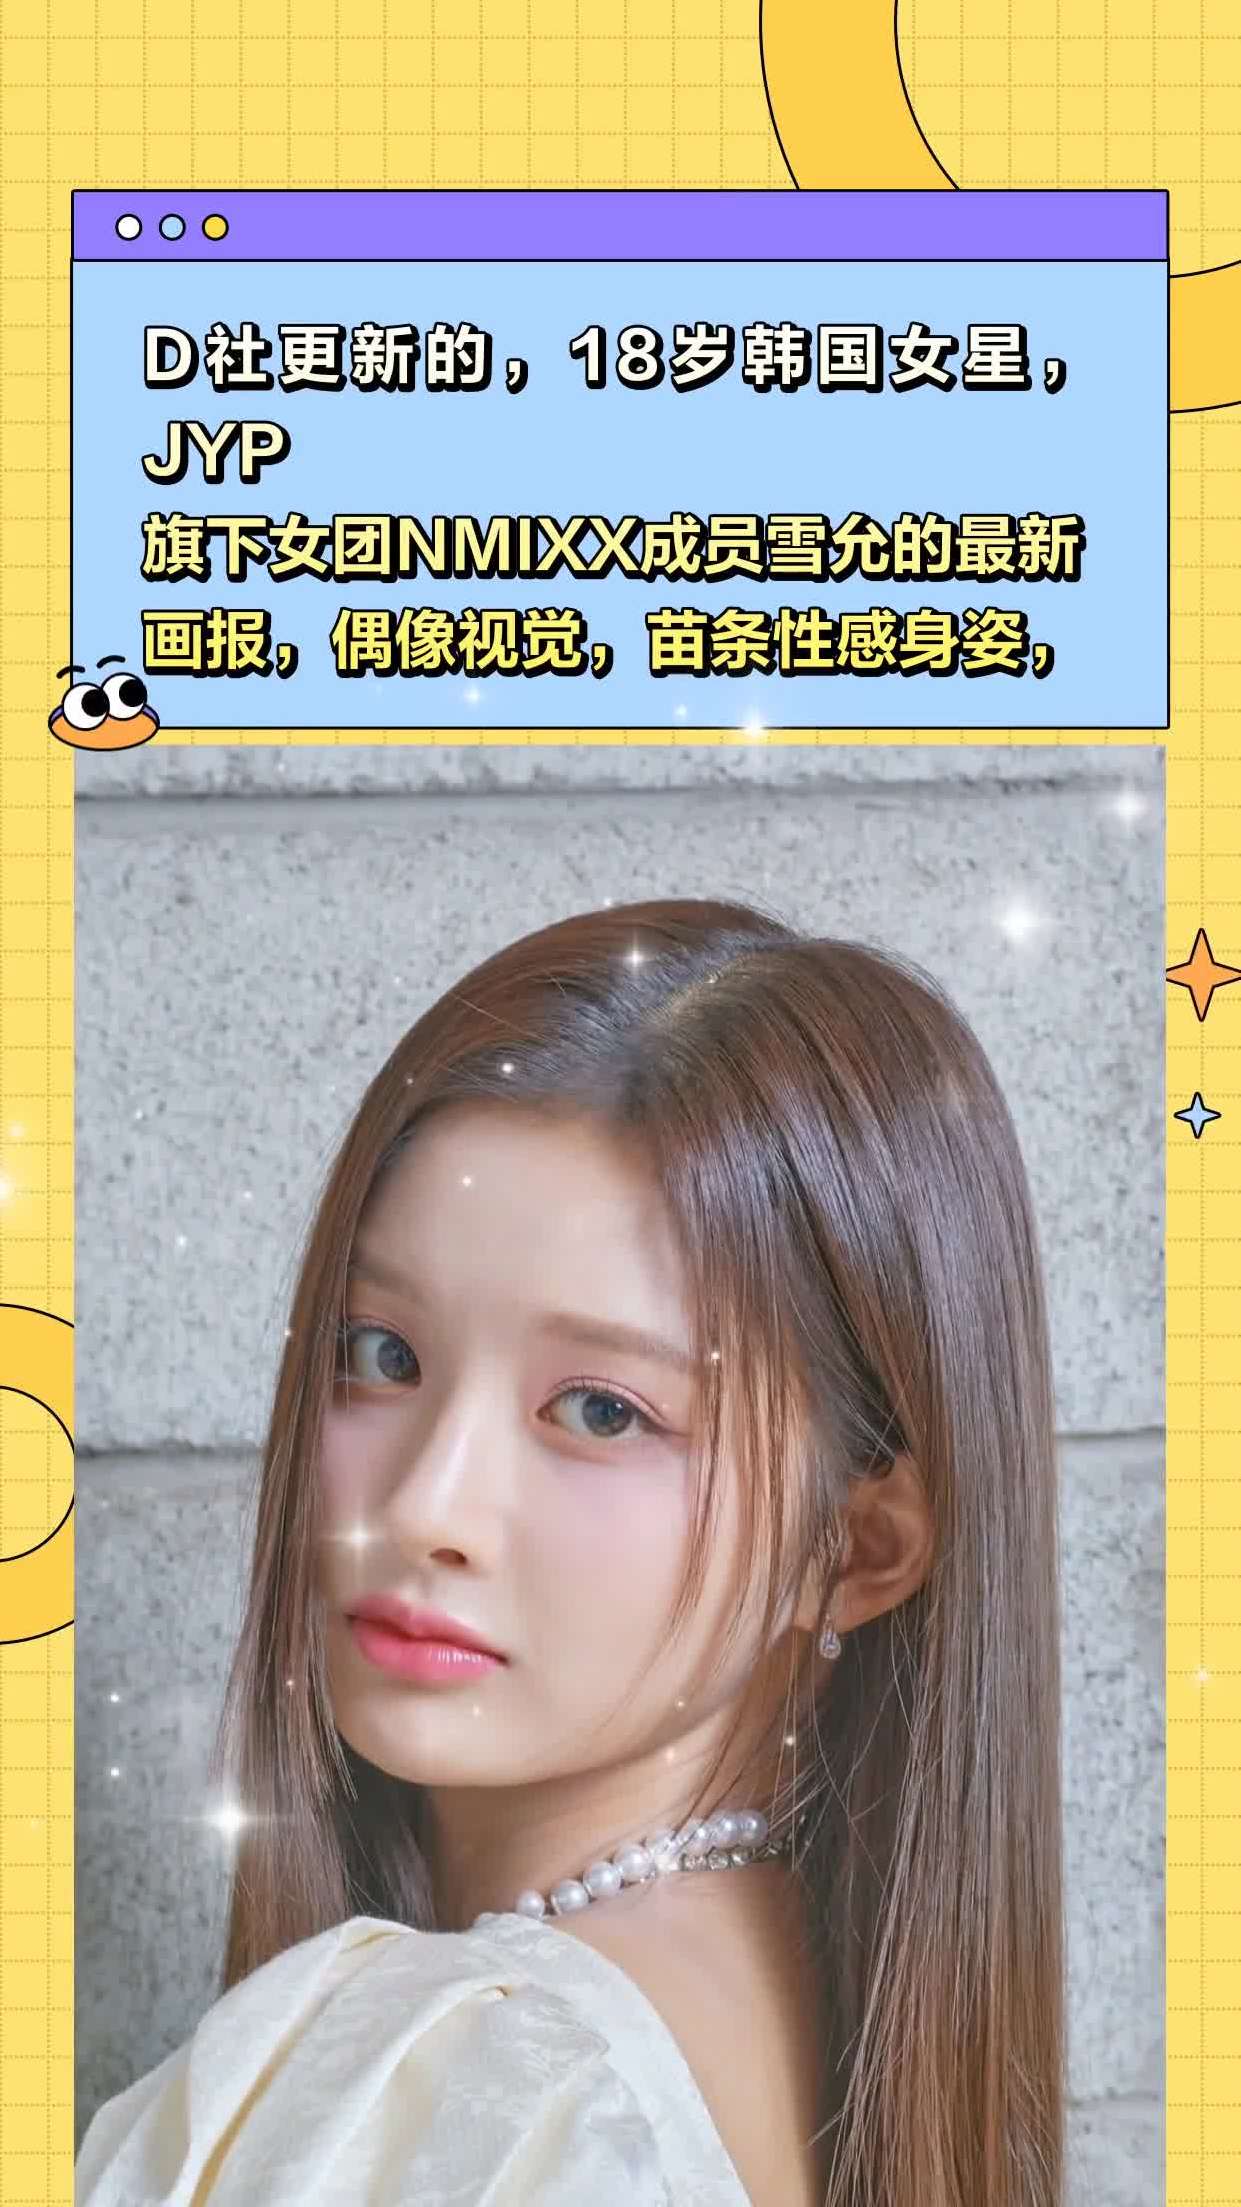 d社更新的18岁韩国女星jyp旗下女团nmixx成员雪允的最新画报偶像视觉